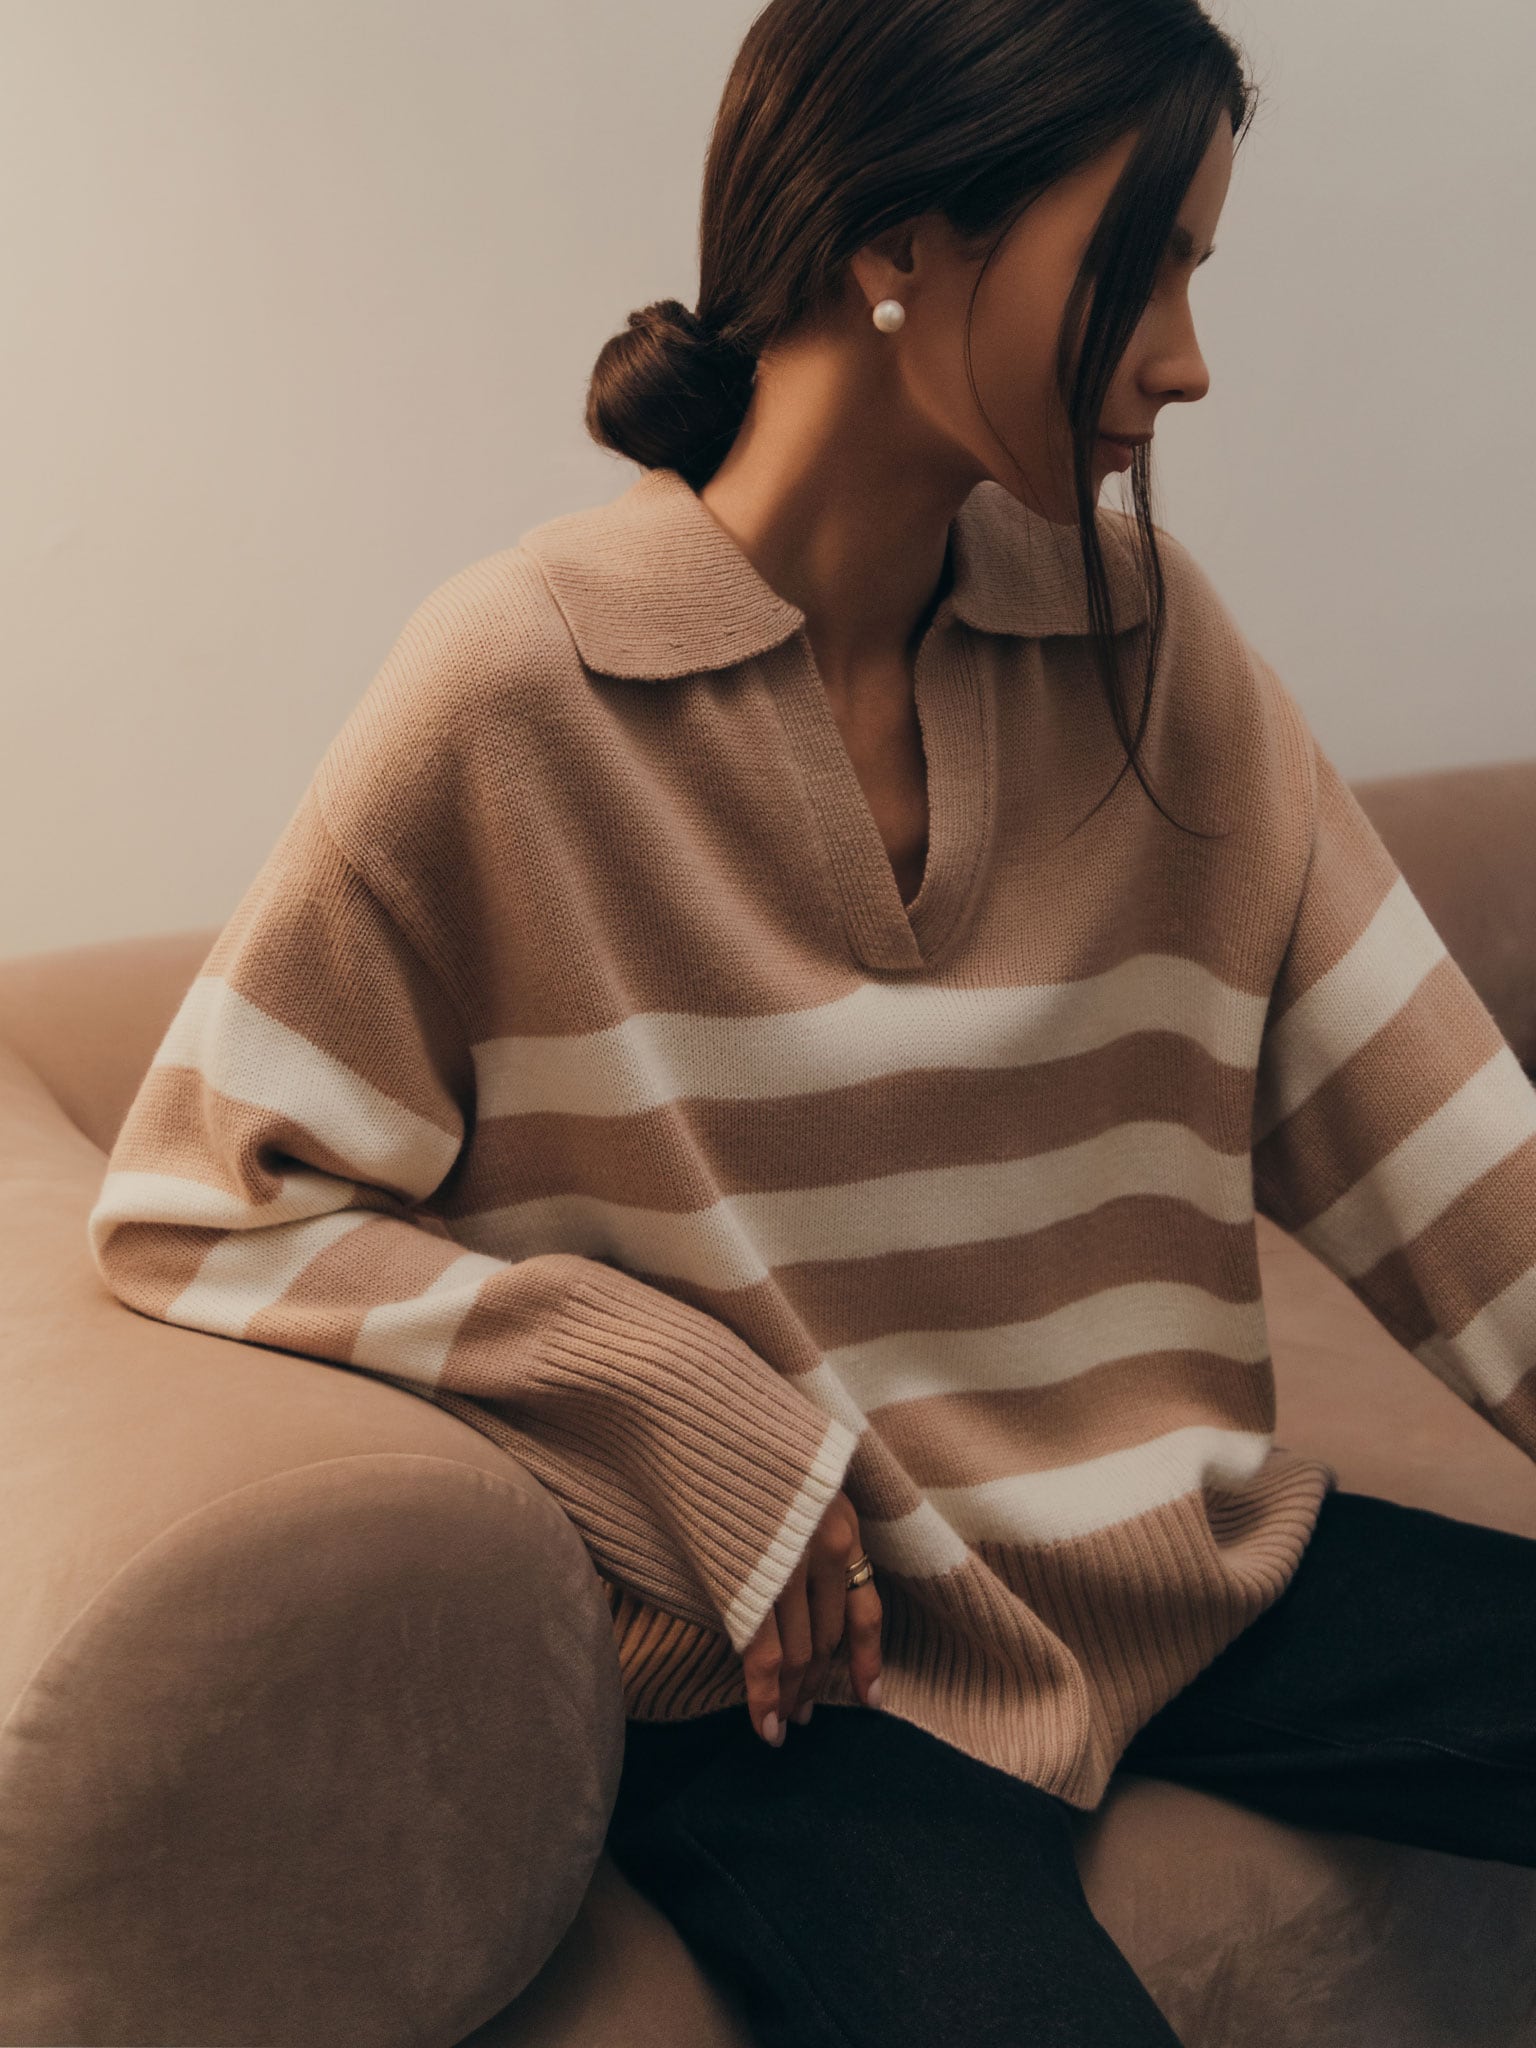 Oversized striped sweater